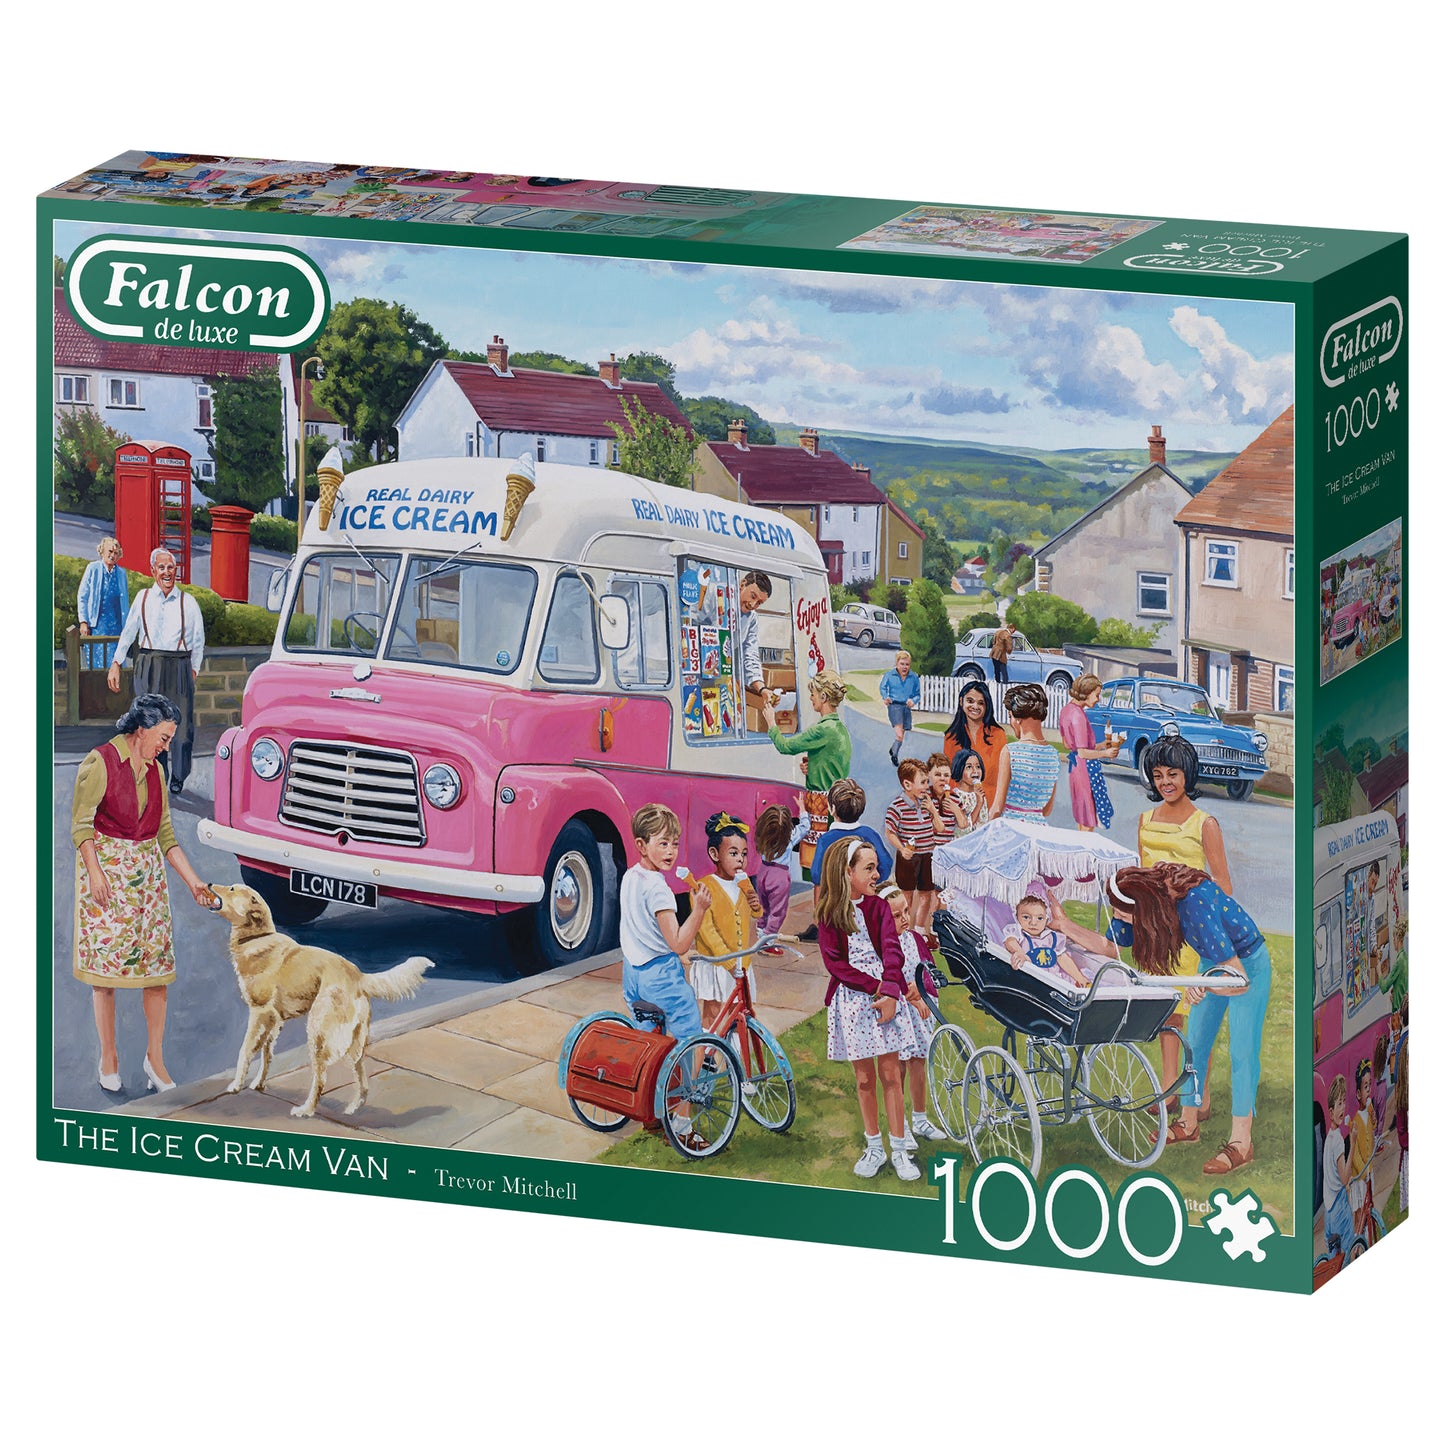 Falcon - The Ice Cream Van (1000 pieces) - product image - Jumboplay.com